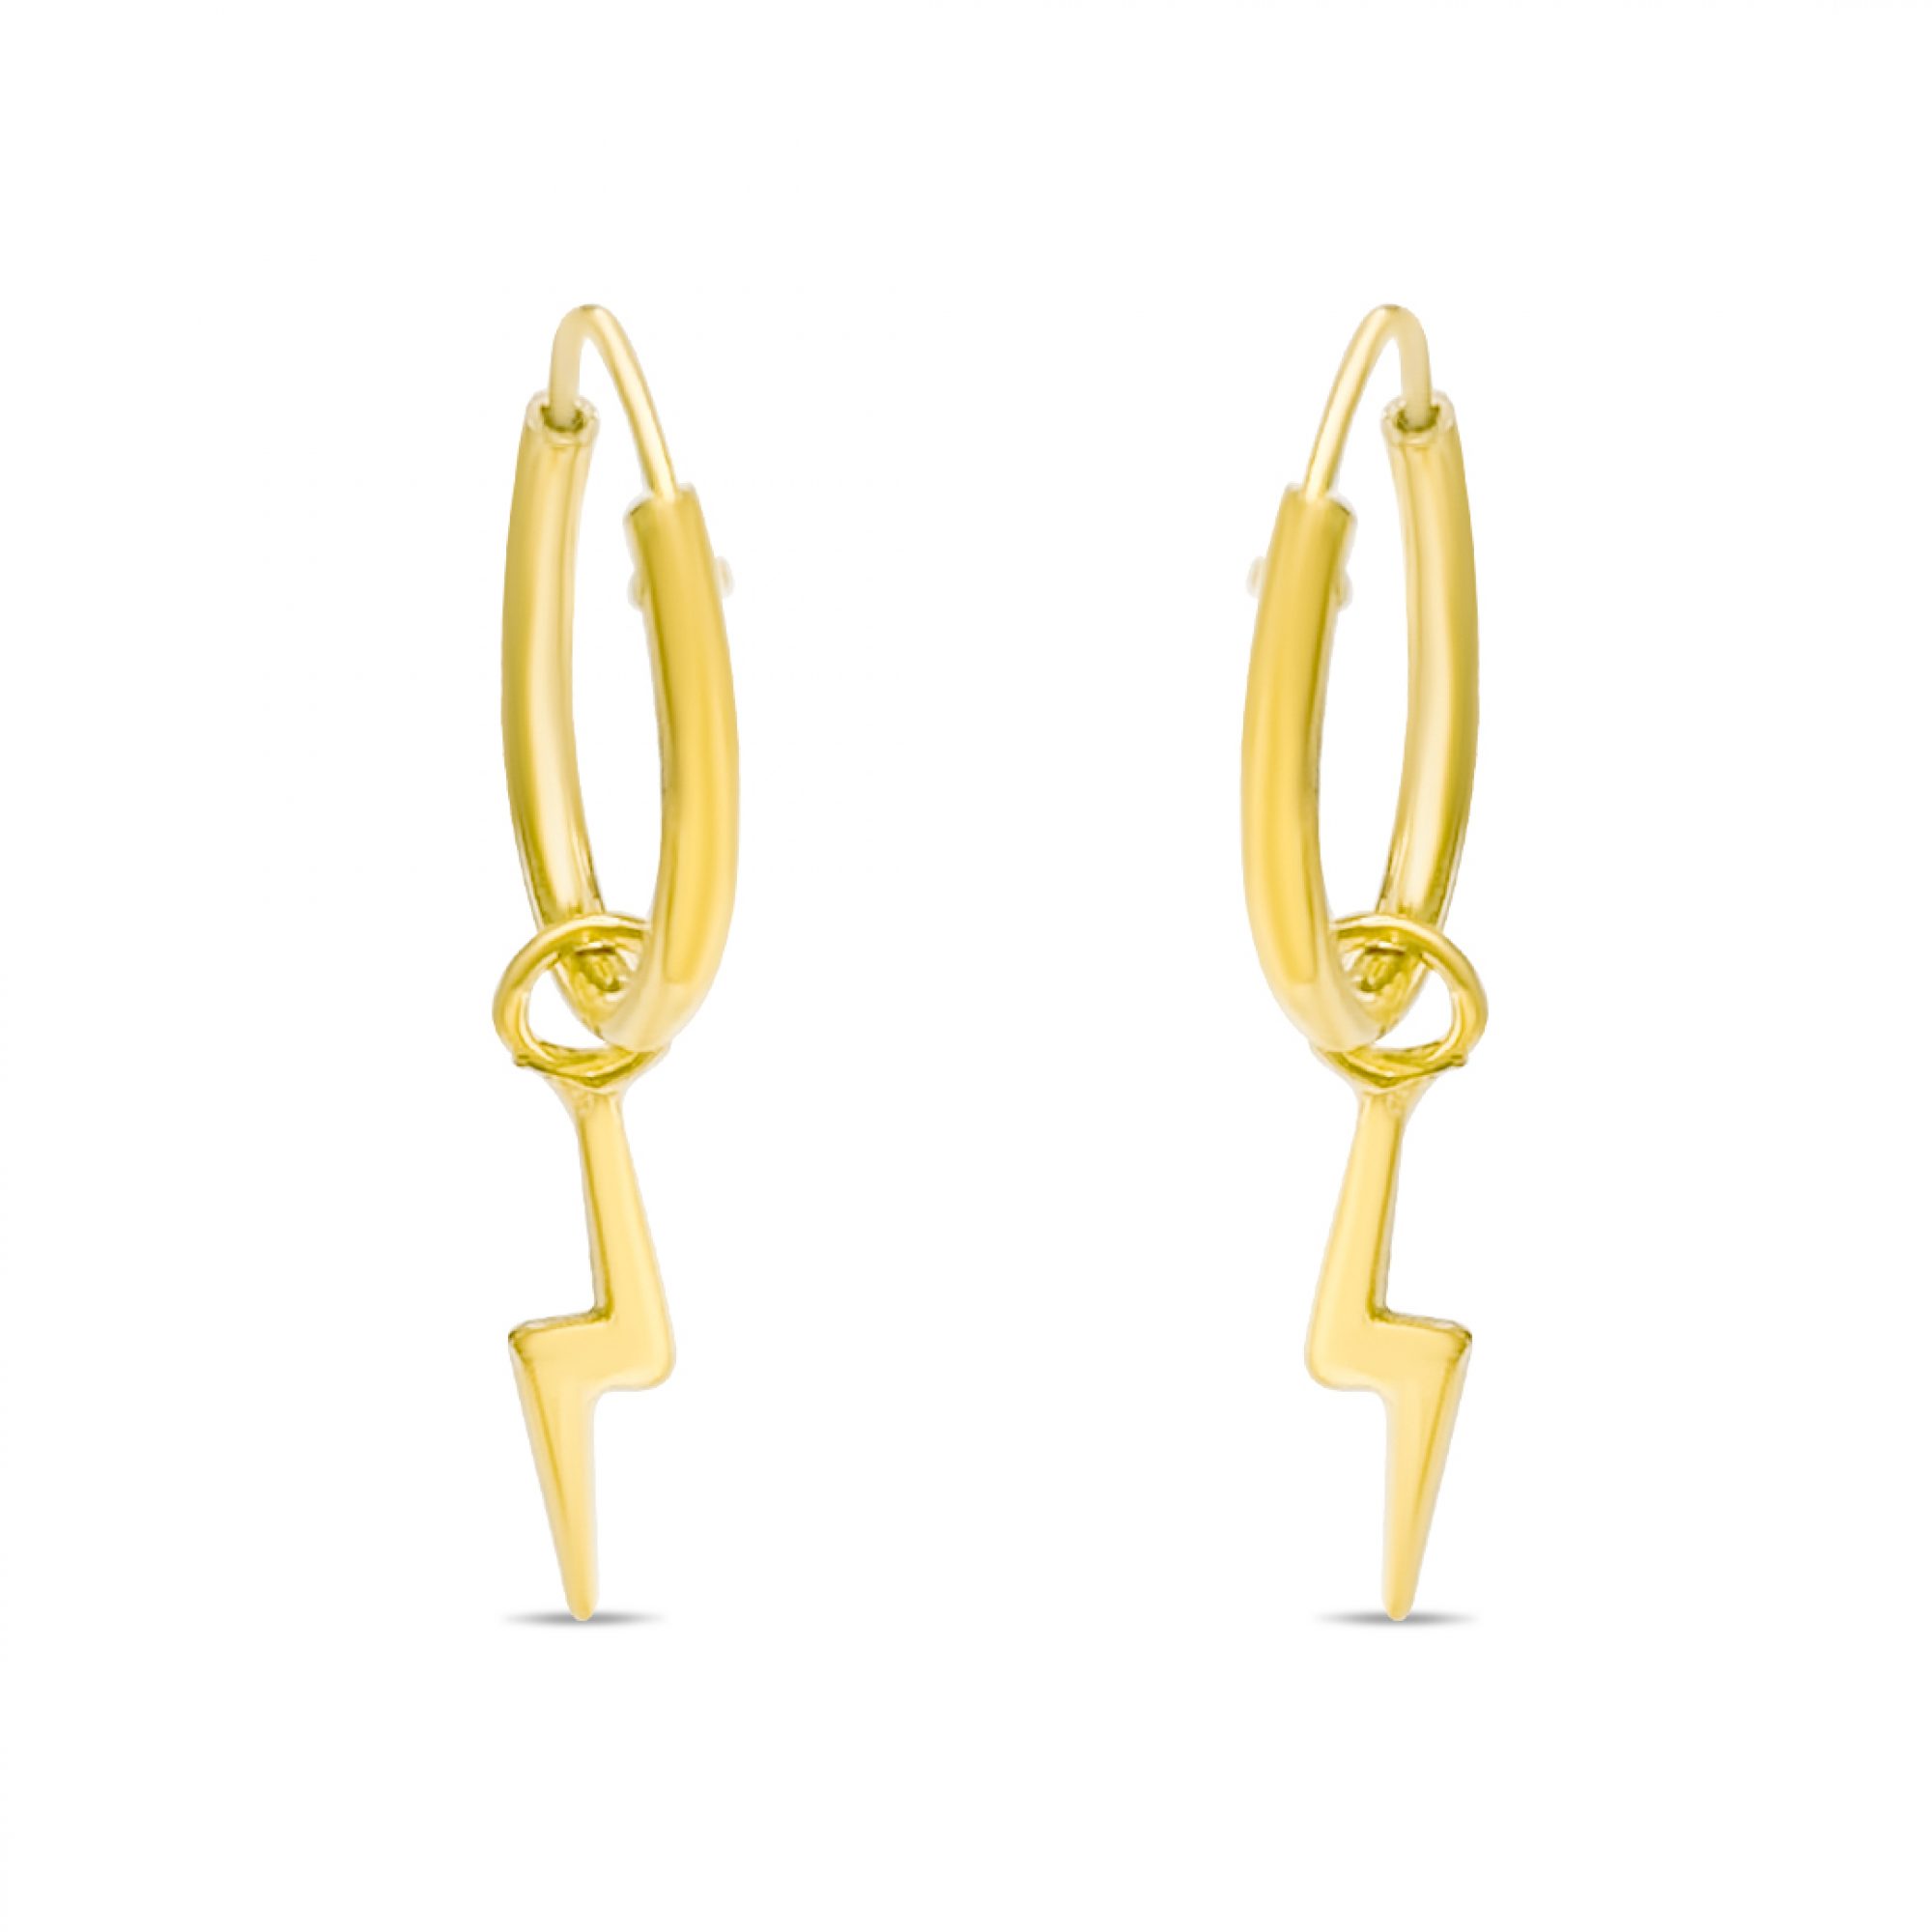 Gold plated earrings with dangle lightning bolt